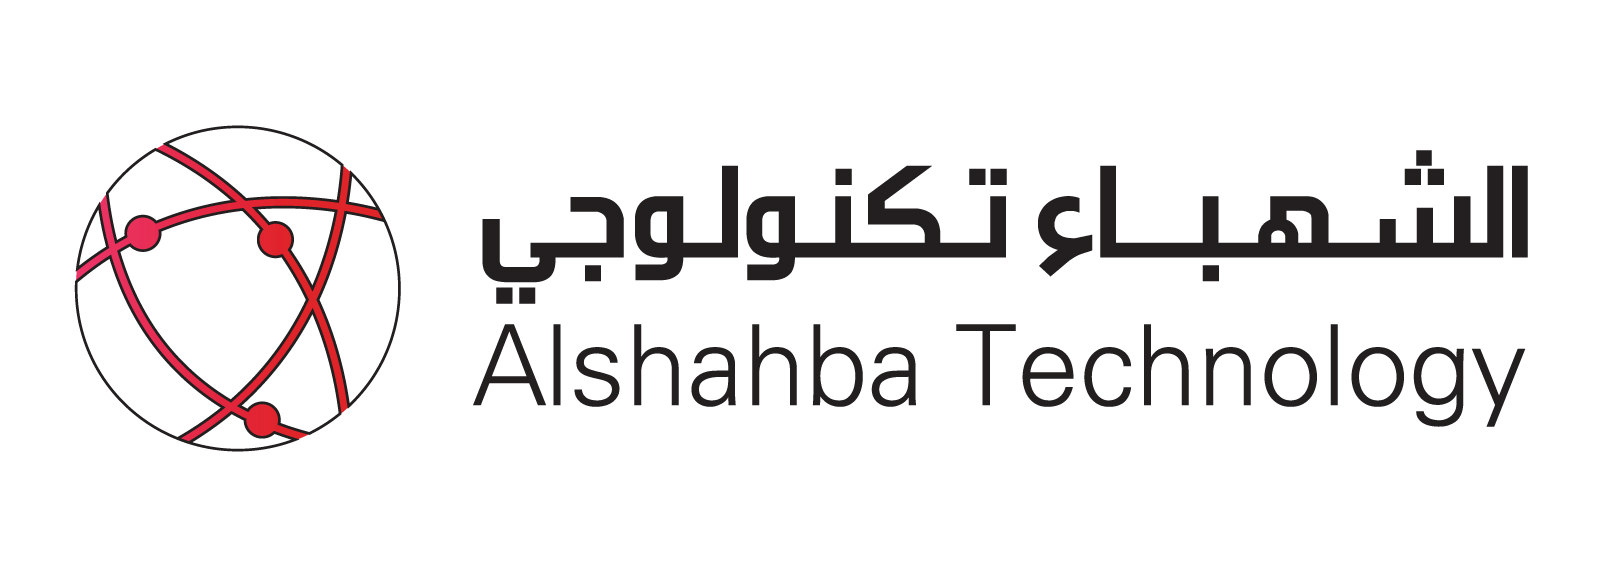 Alshahba Technology